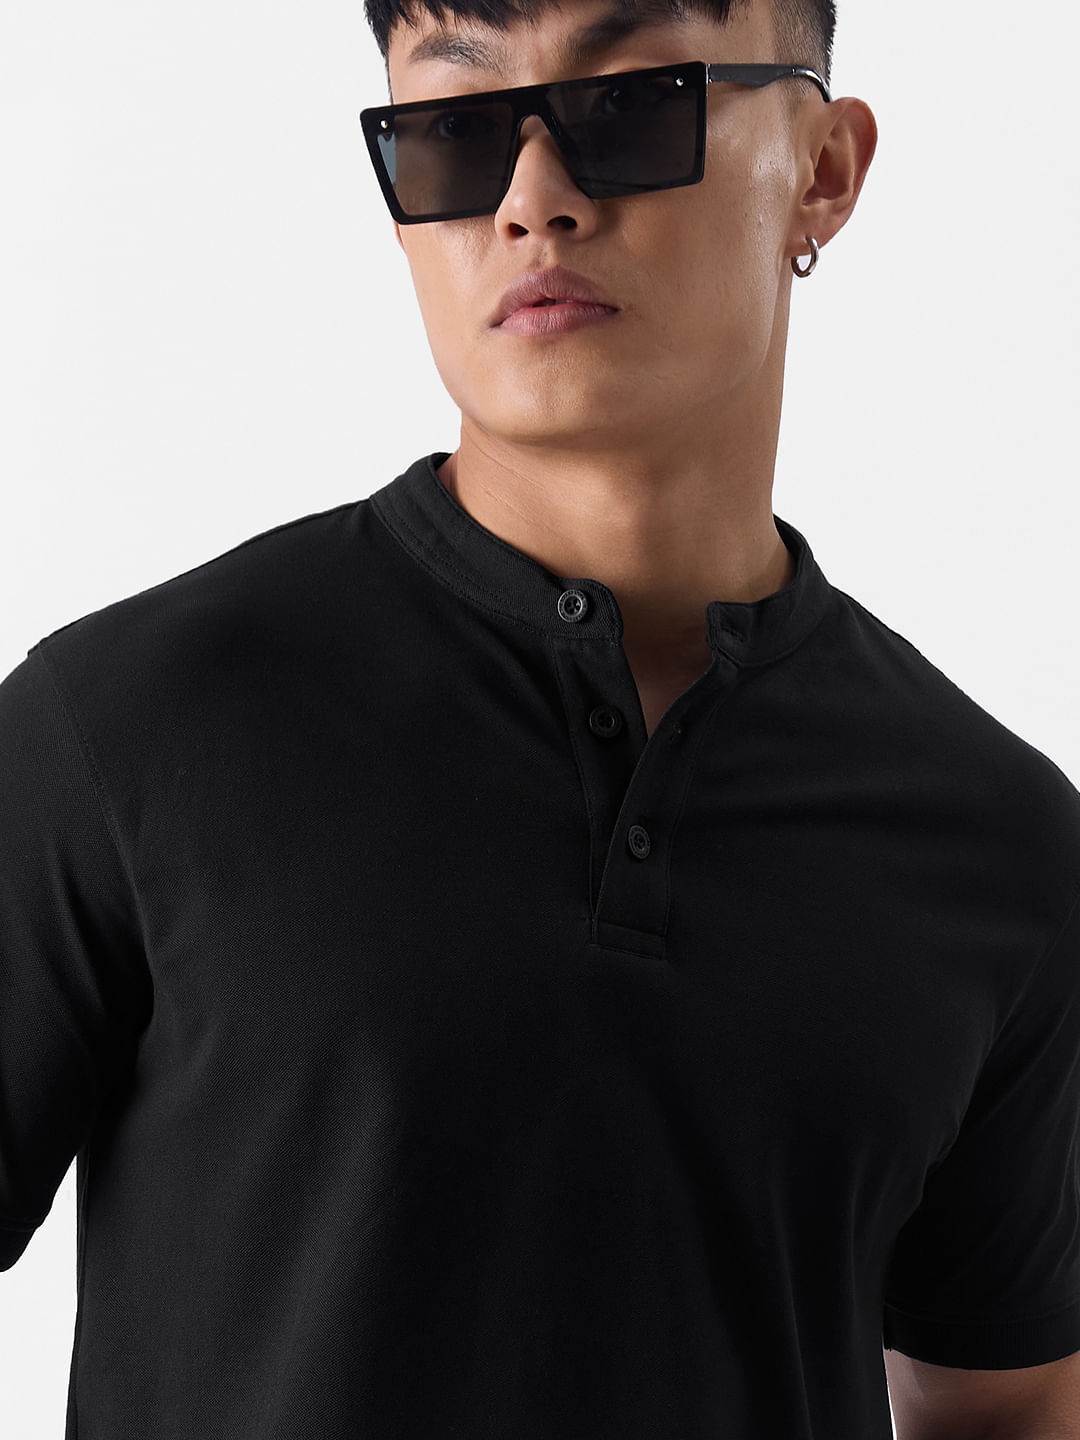 The Souled Store | Men's Solids: Midnight Black Mandarin Polo T-Shirt